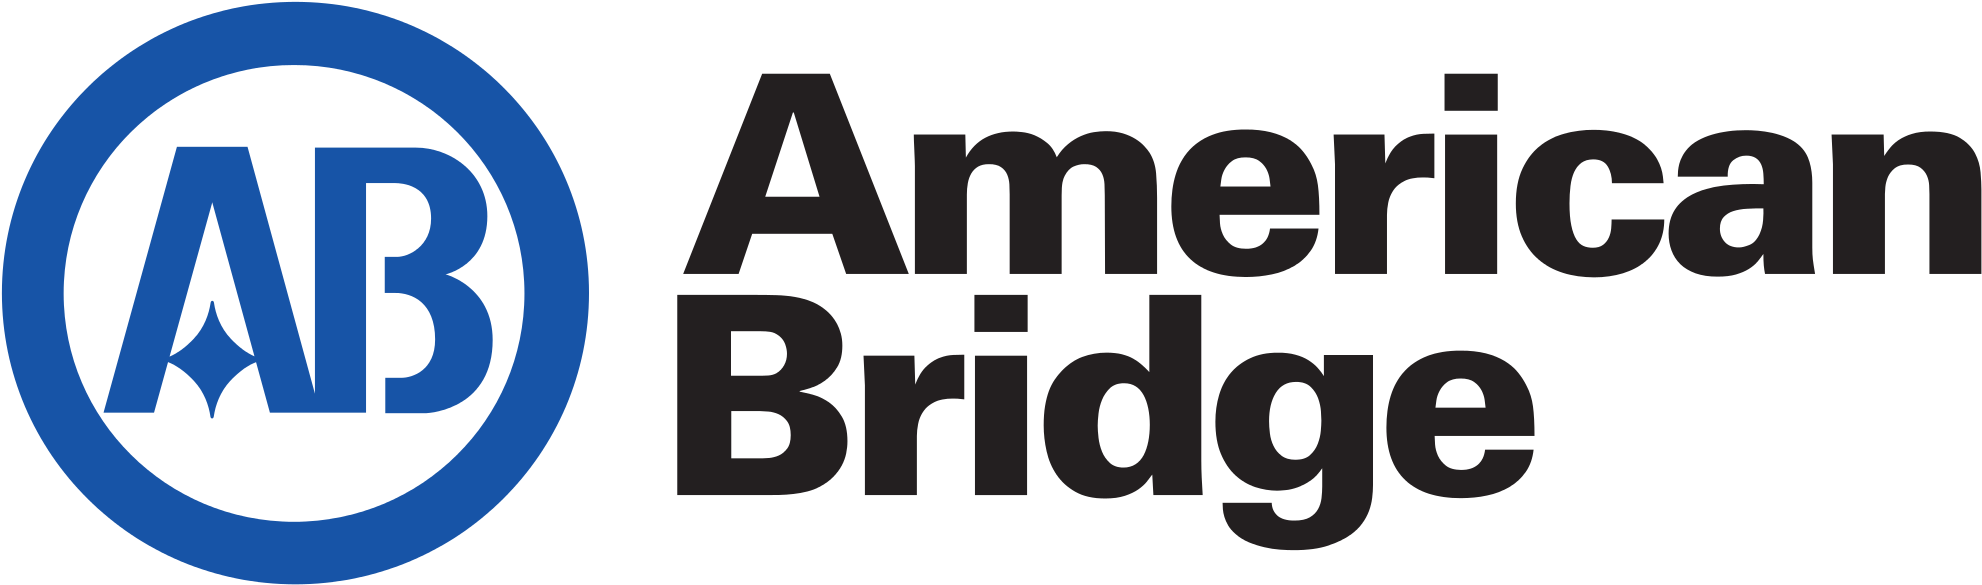 Open - American Bridge Company (2000x601), Png Download